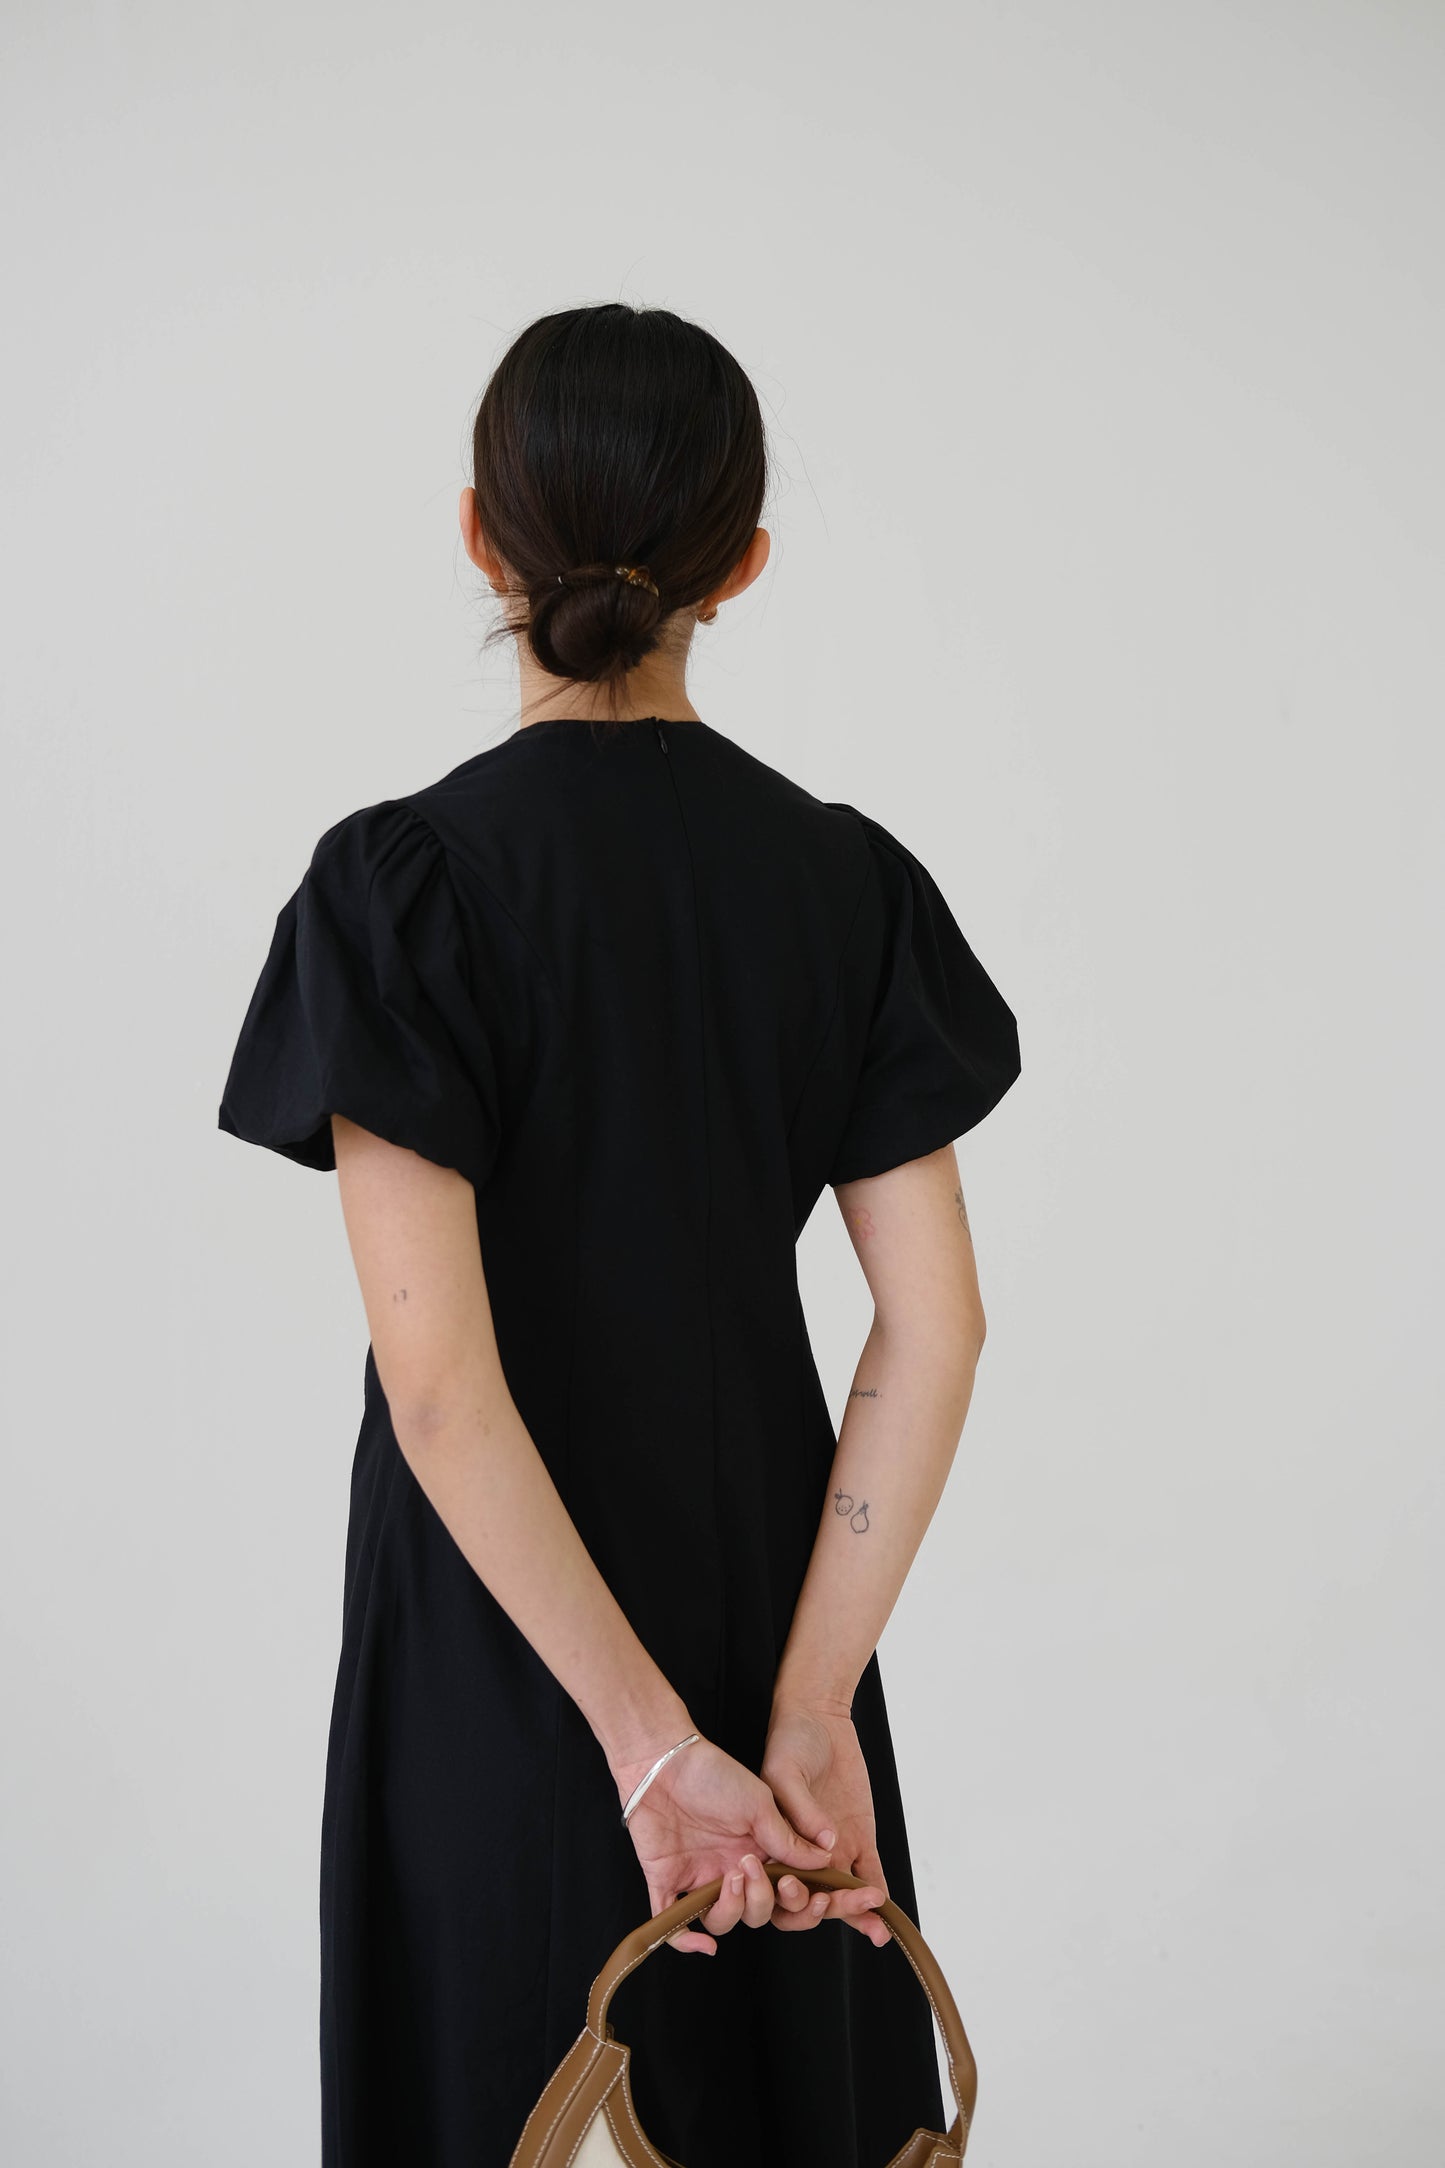 V-neck Puff Sleeve dress in classic black